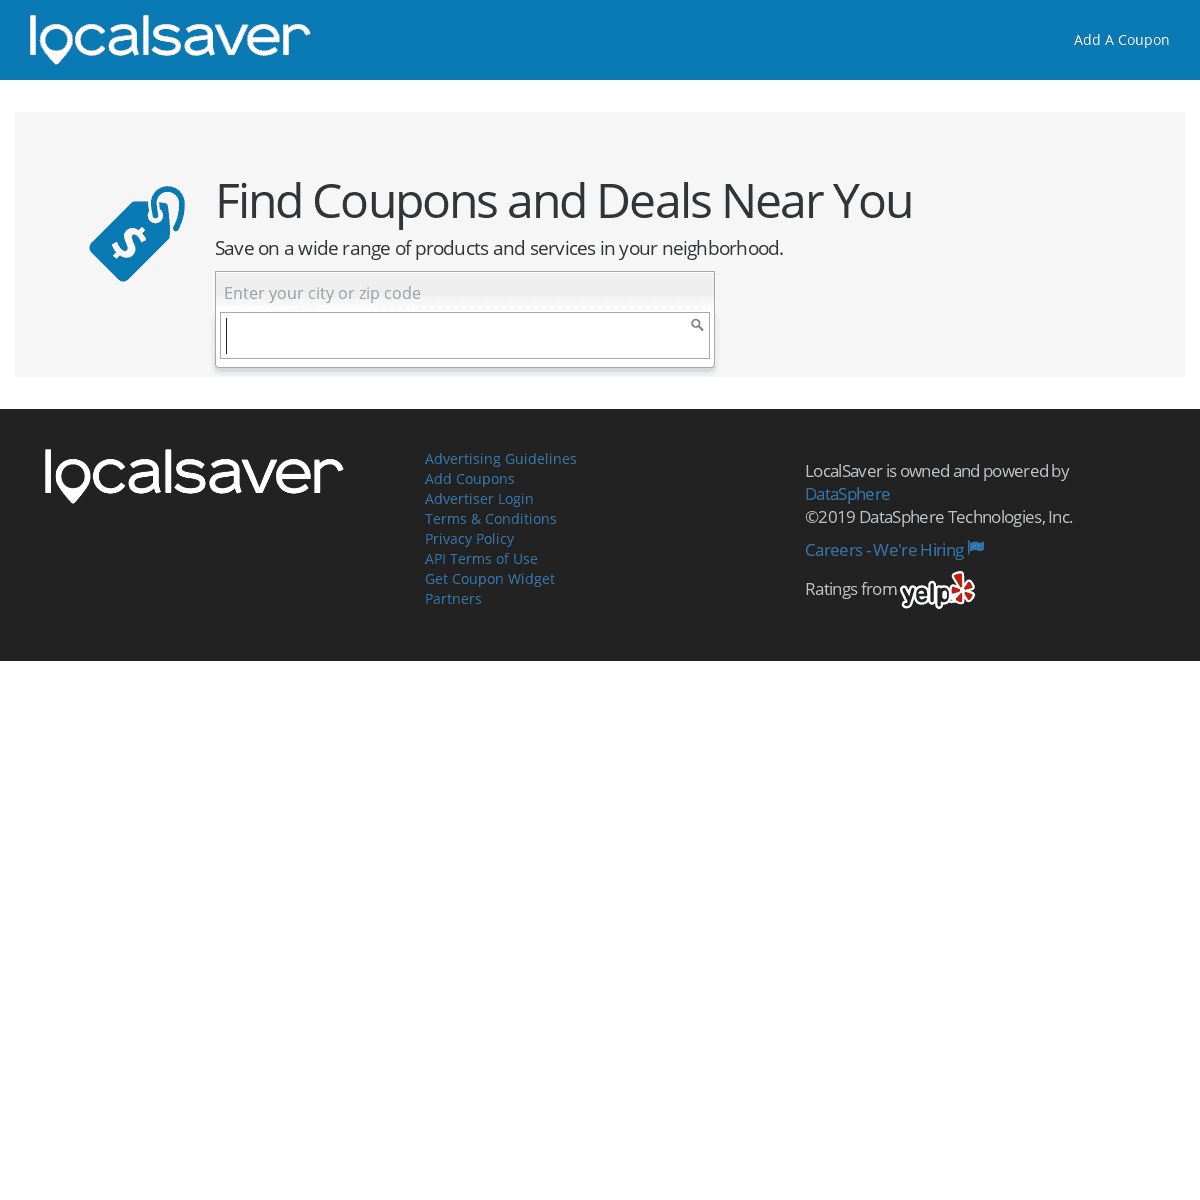 A complete backup of localsaver.com